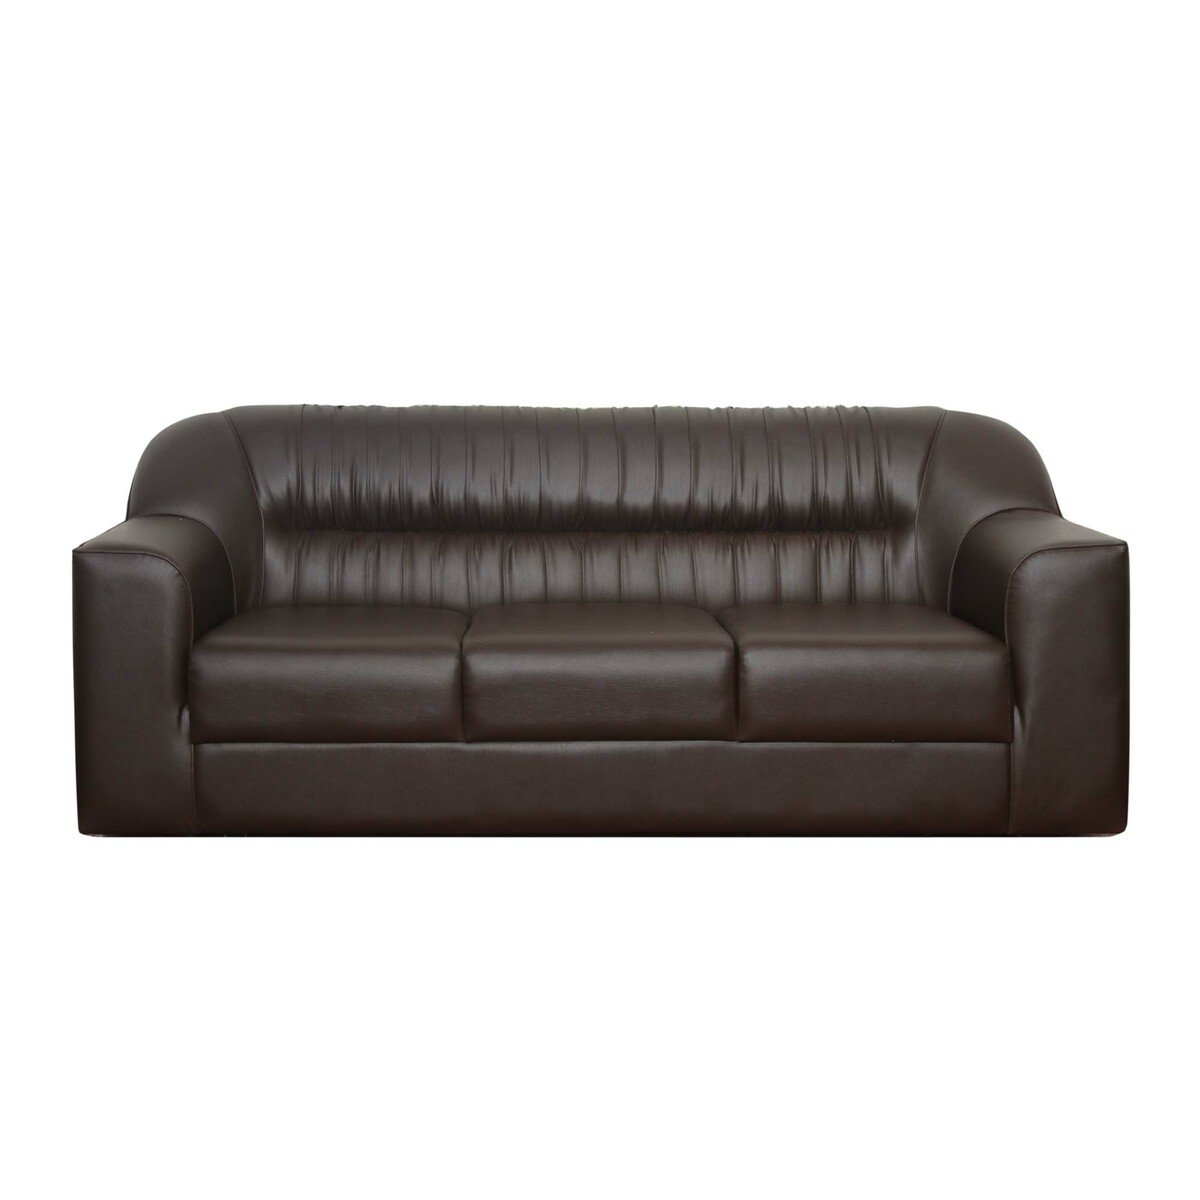 Design Plus PVC Sofa Set 5 Seater (3+1+1) SPR01 Brown